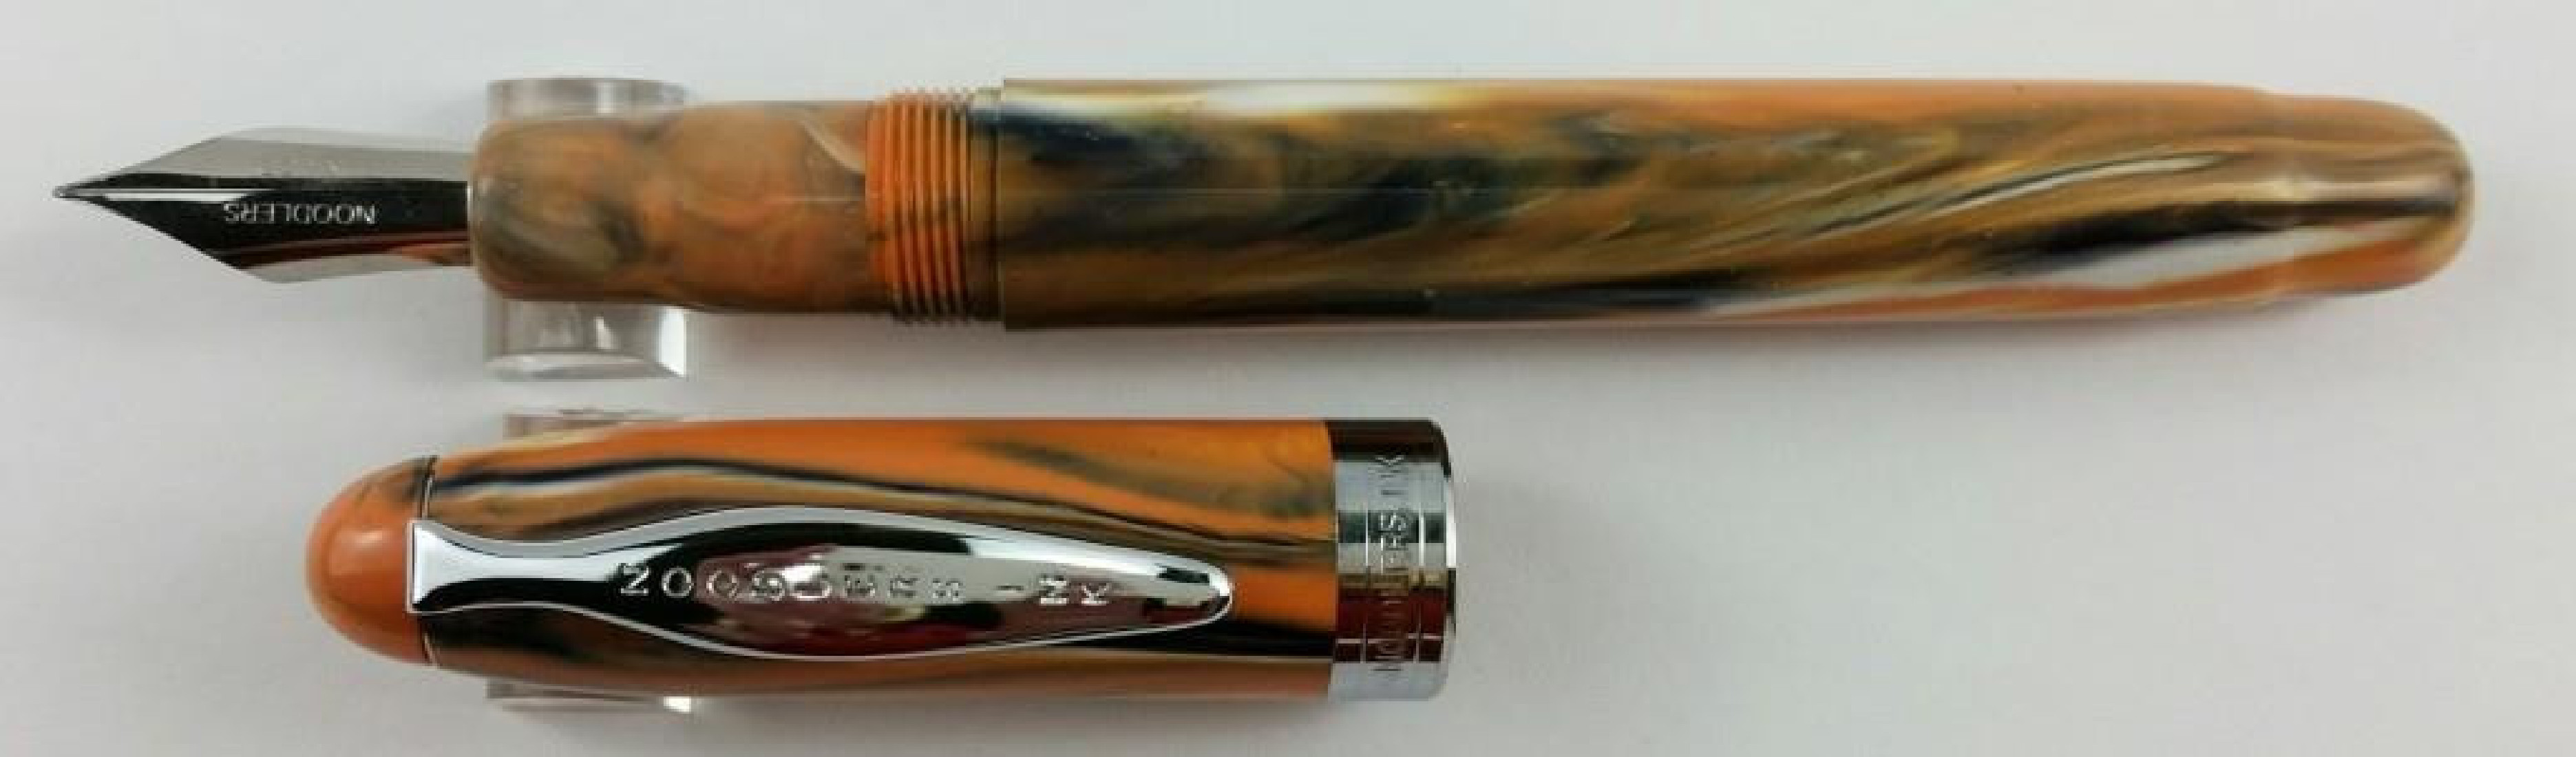 Noodlers Tiger Ahab Flex 15039  Fountain Pen